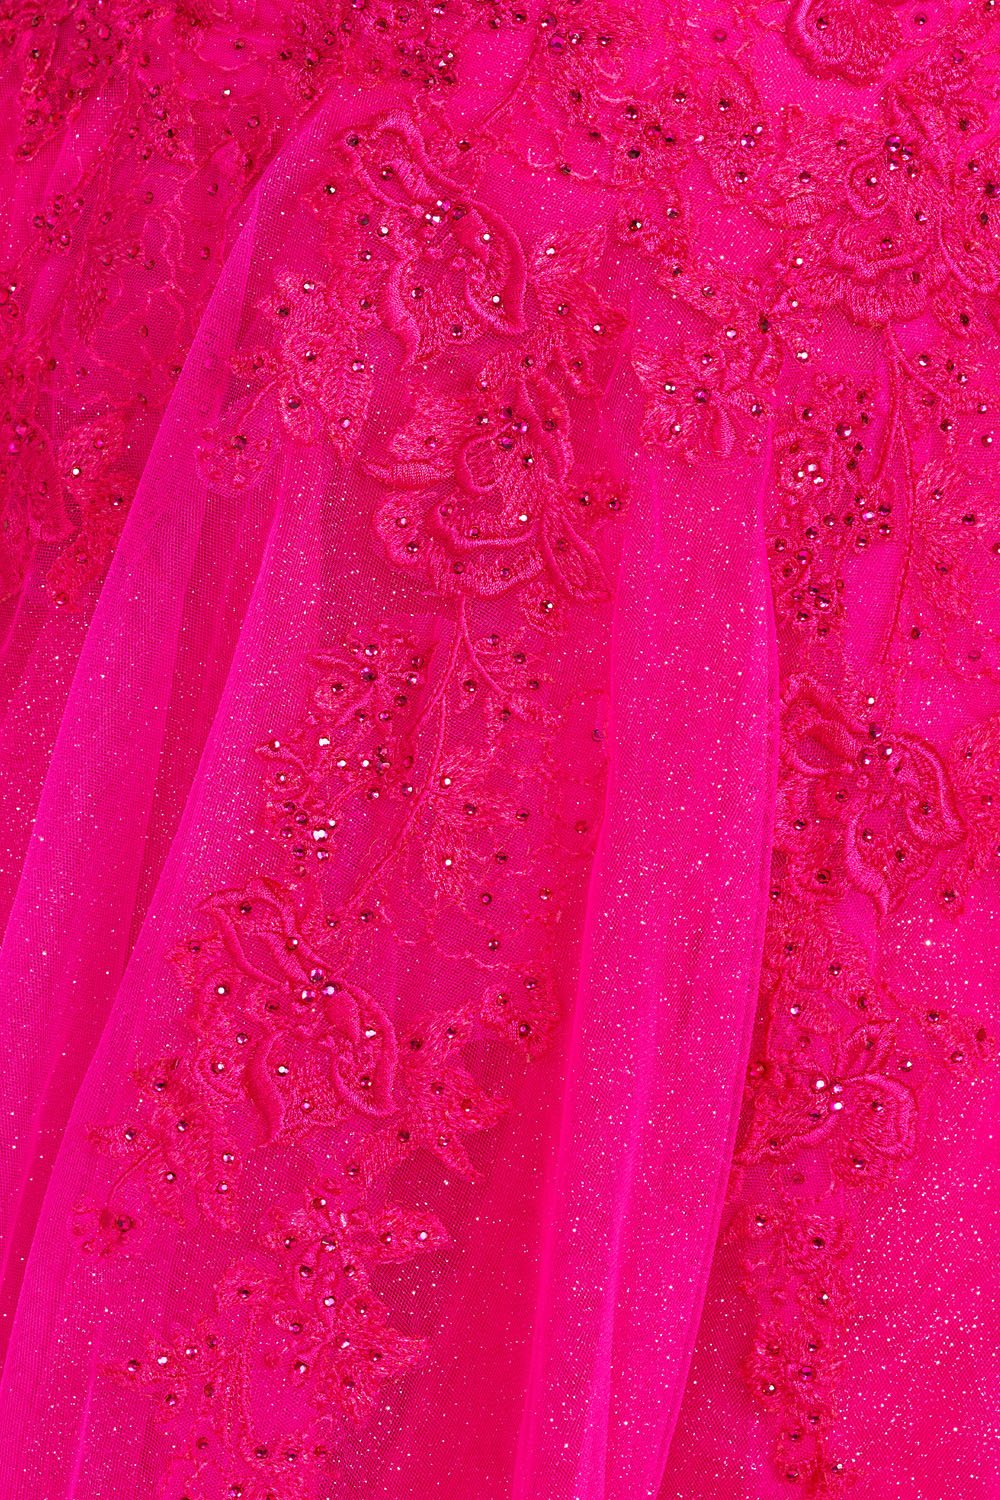 Ellie Wilde Fuchsia EW122014 Prom Dress Image.  Fuchsia formal dress.